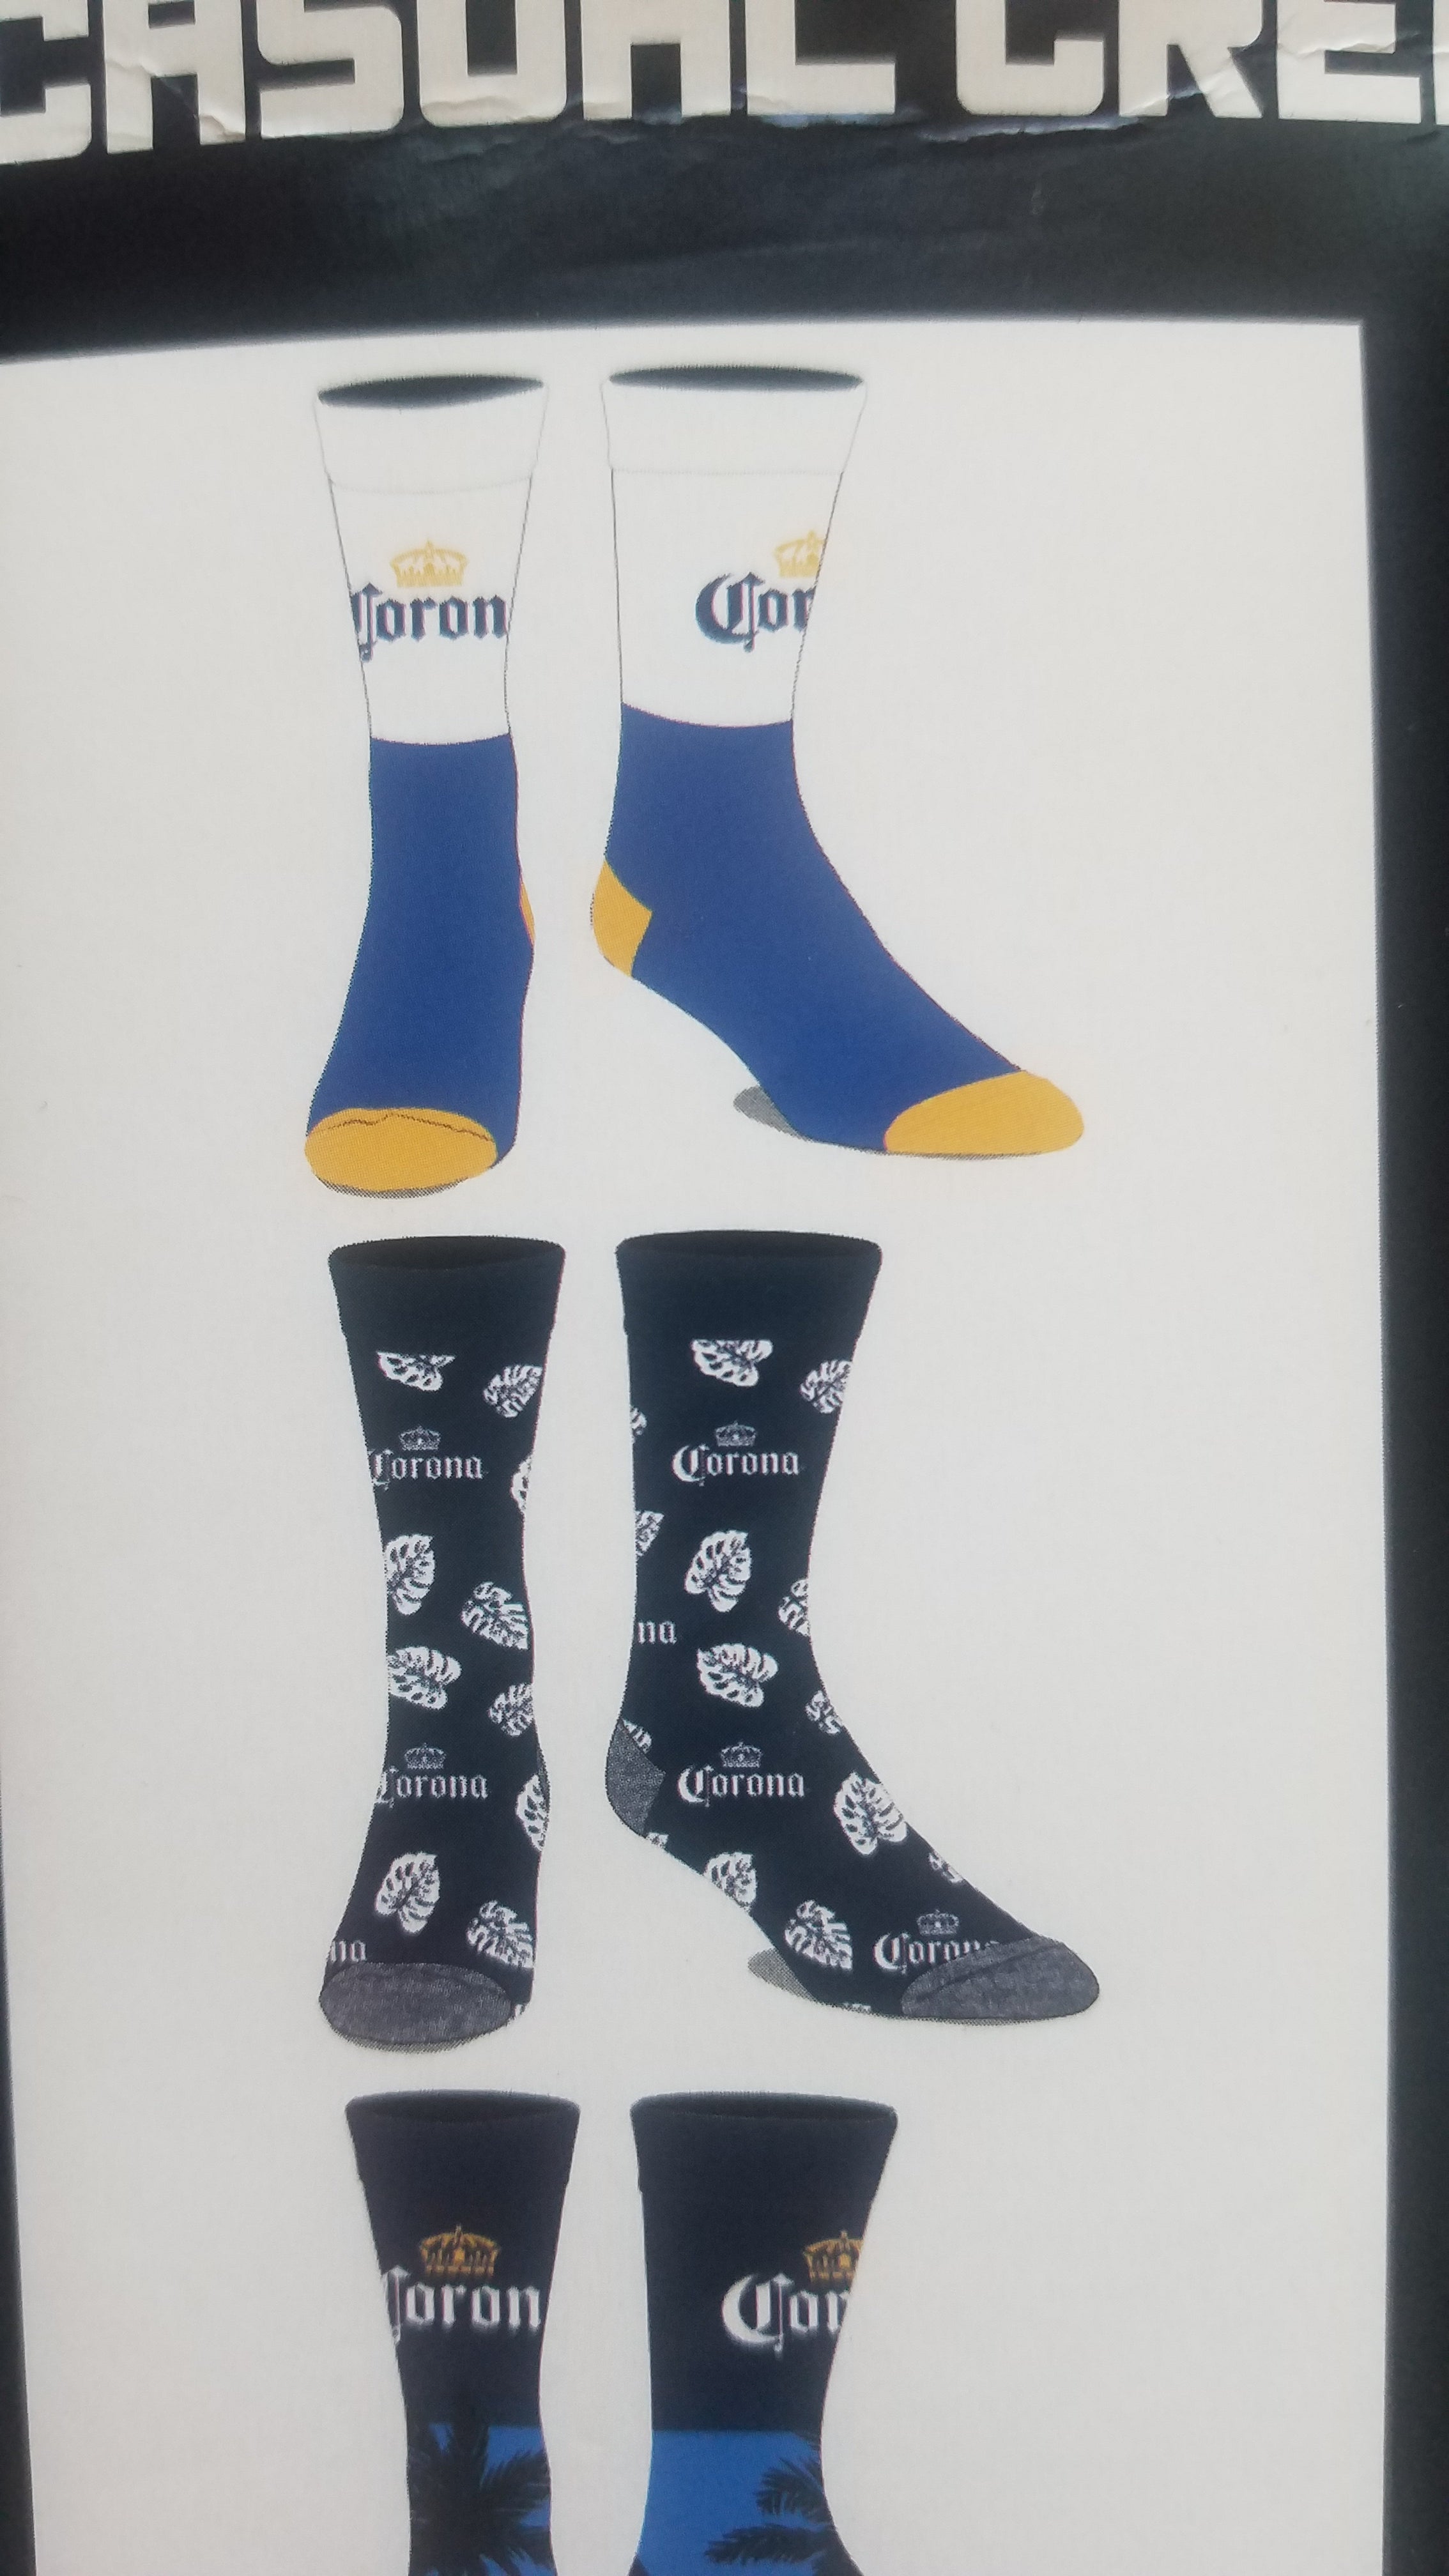 Corona beer Mens casual crew socks 6 pair shoe size 8 12 new in package